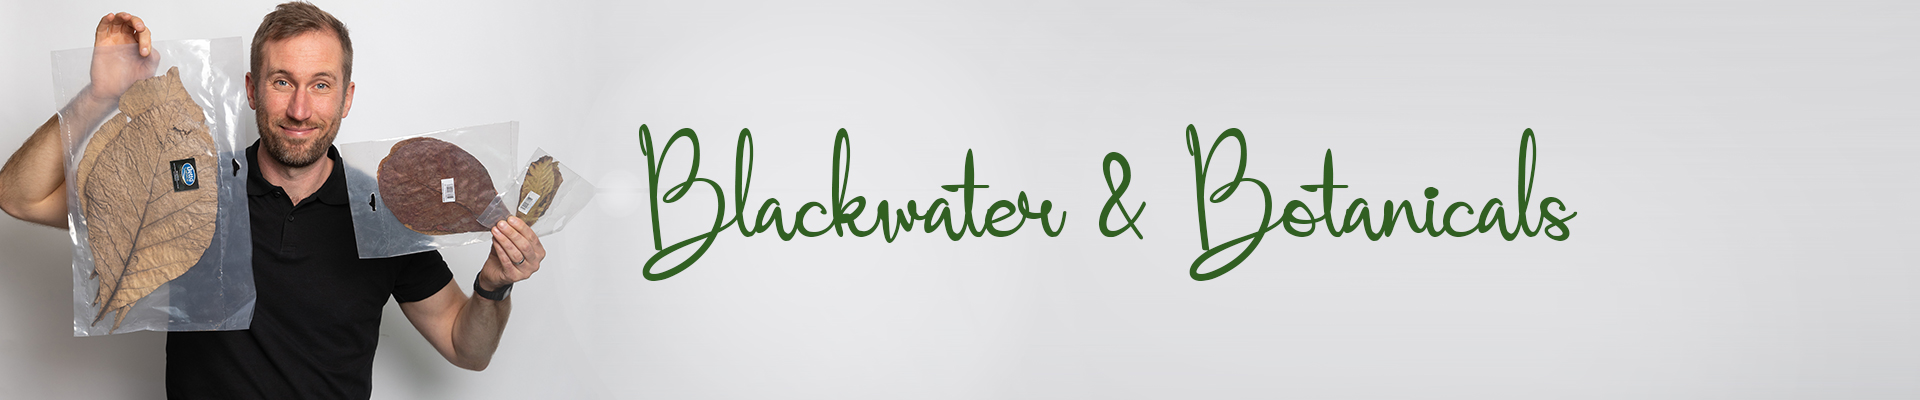 Blackwater & Botanicals